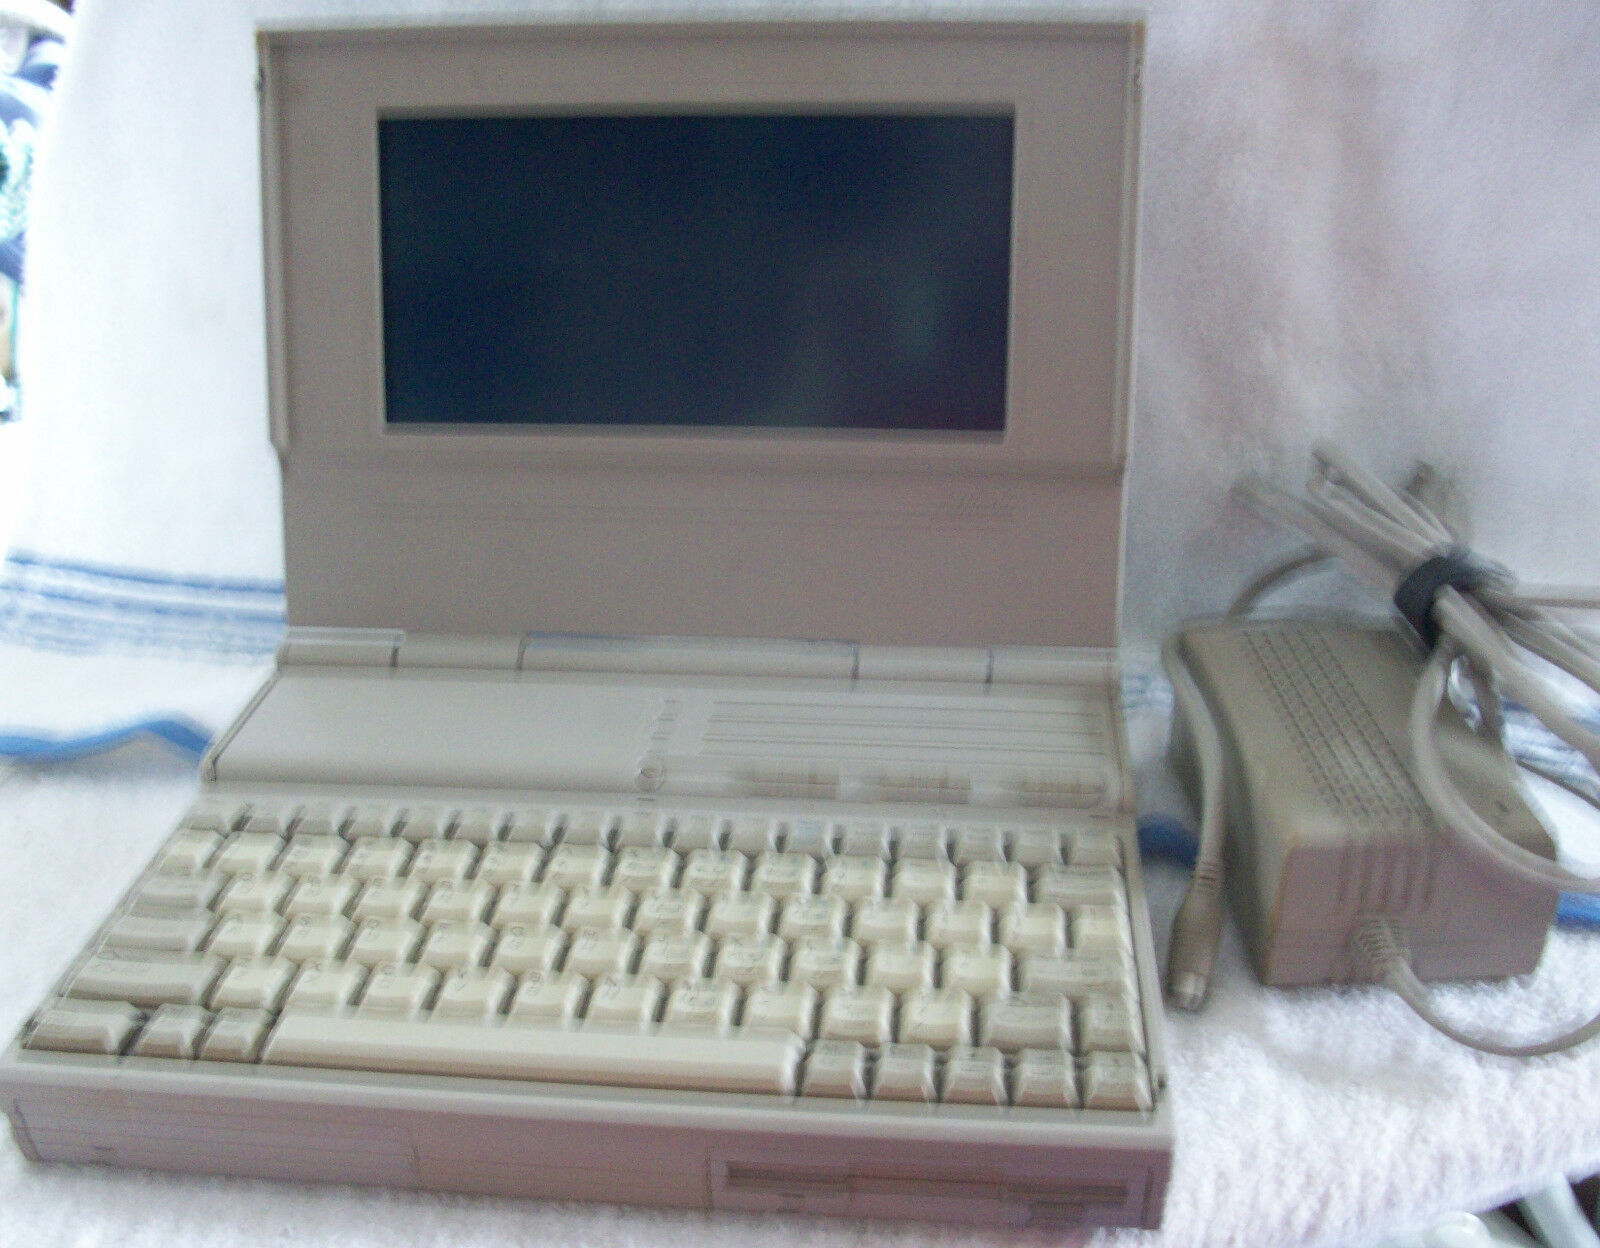 Vintage Compaq LTE/286 Series 2690A Laptop Computer circa 1989